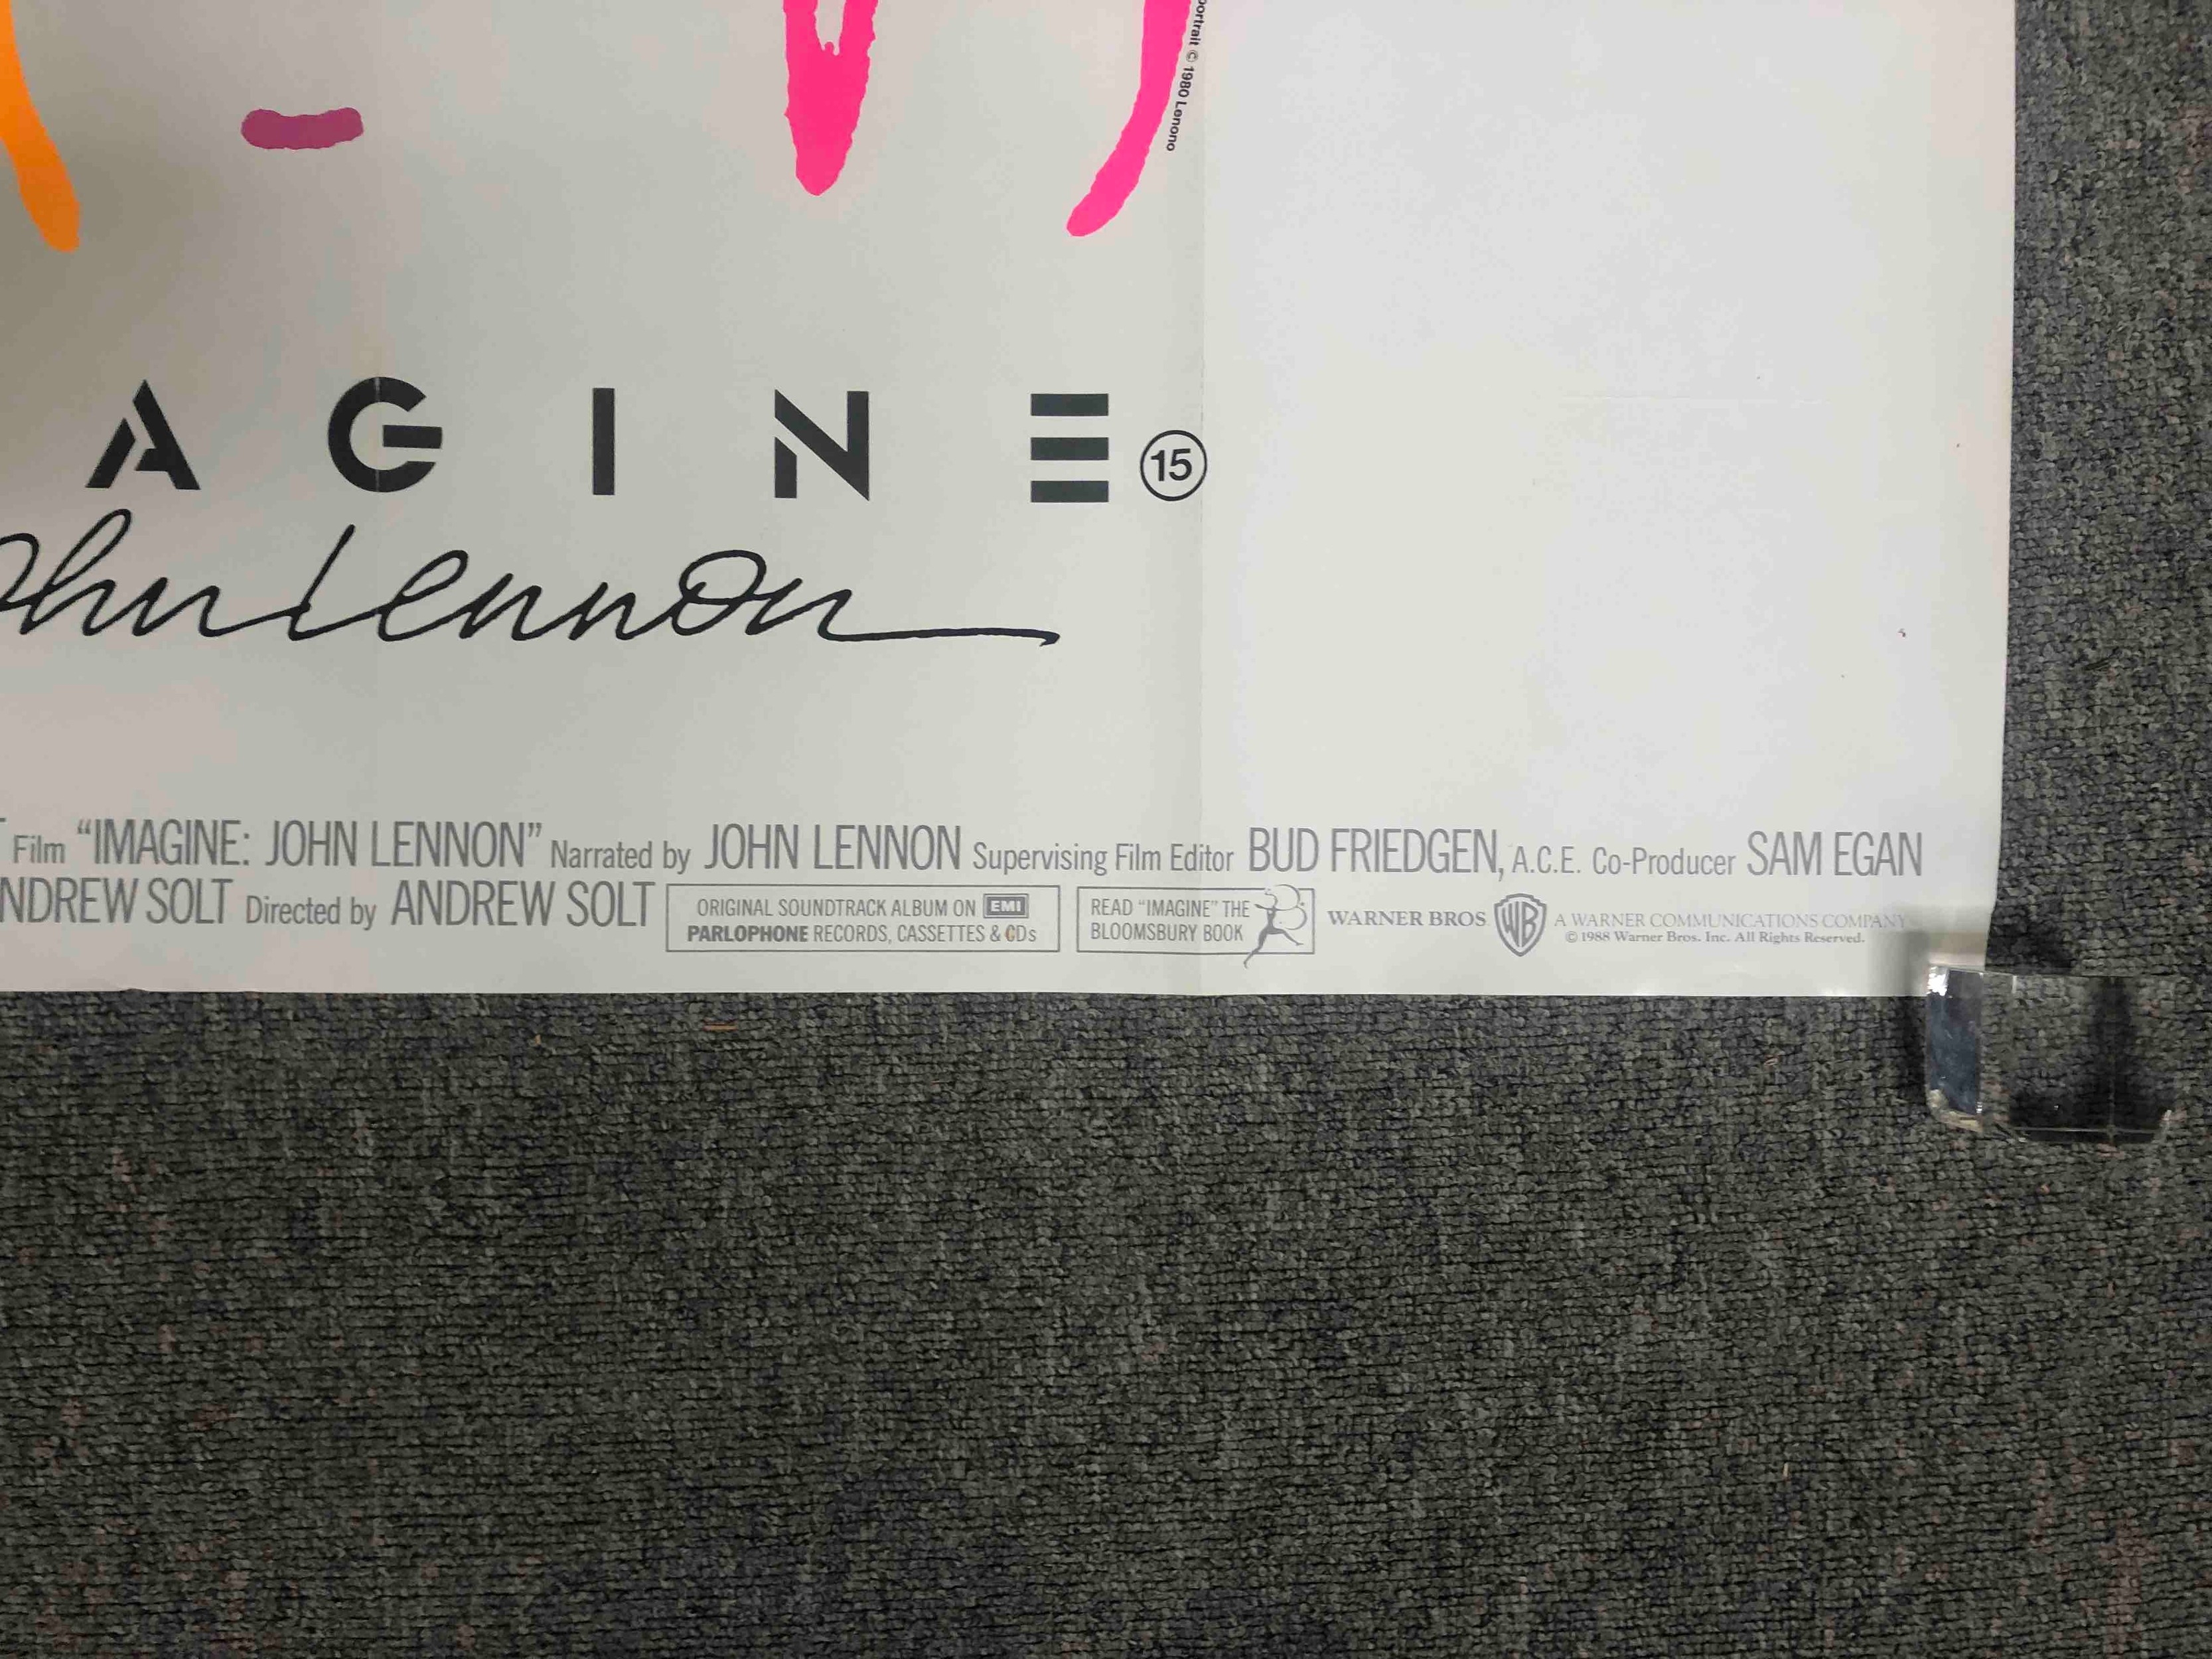 A British Quad film poster for the 1988 documentary Imagine, artwork by John Lennon. H.76 W.101cm. - Image 5 of 6